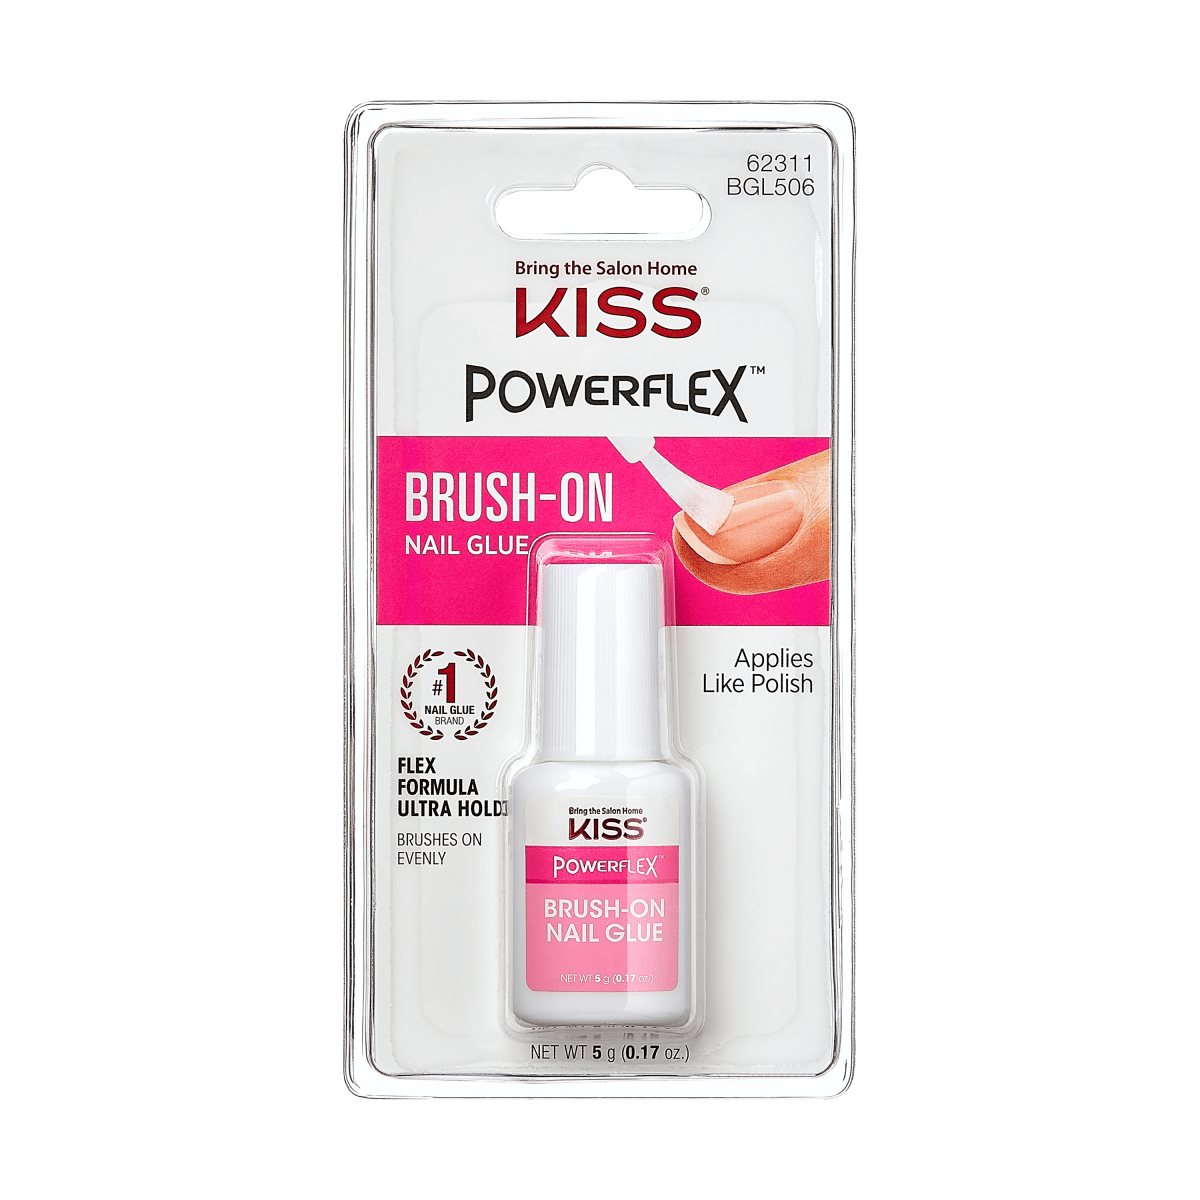 KISS PowerFlex Brush-On Nail Glue